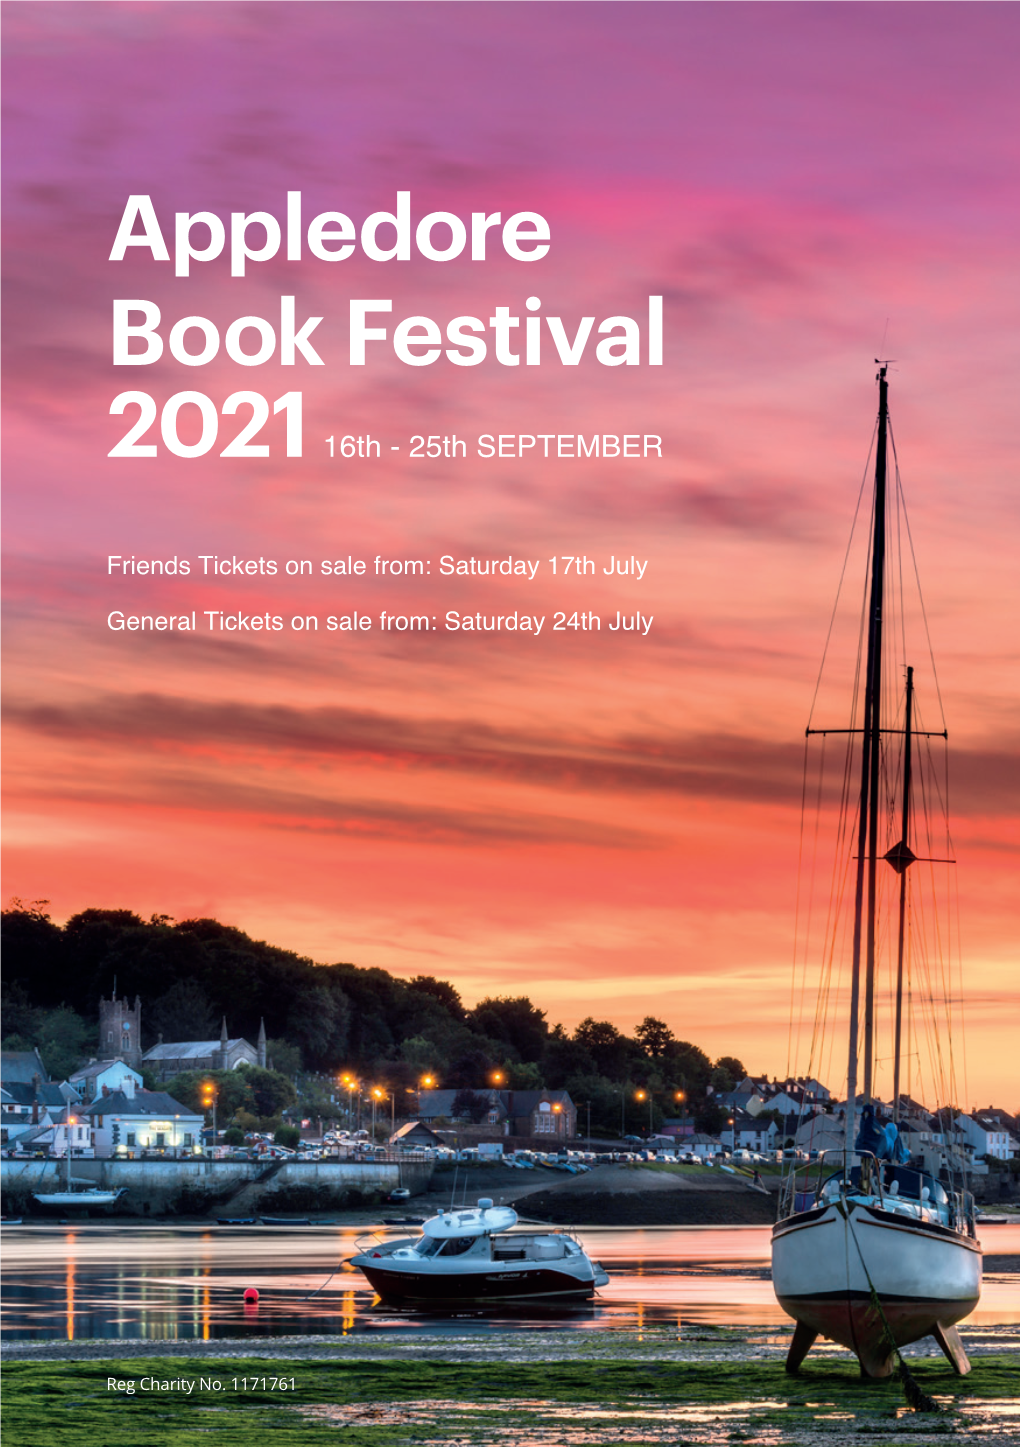 Appledore Book Festival 2021